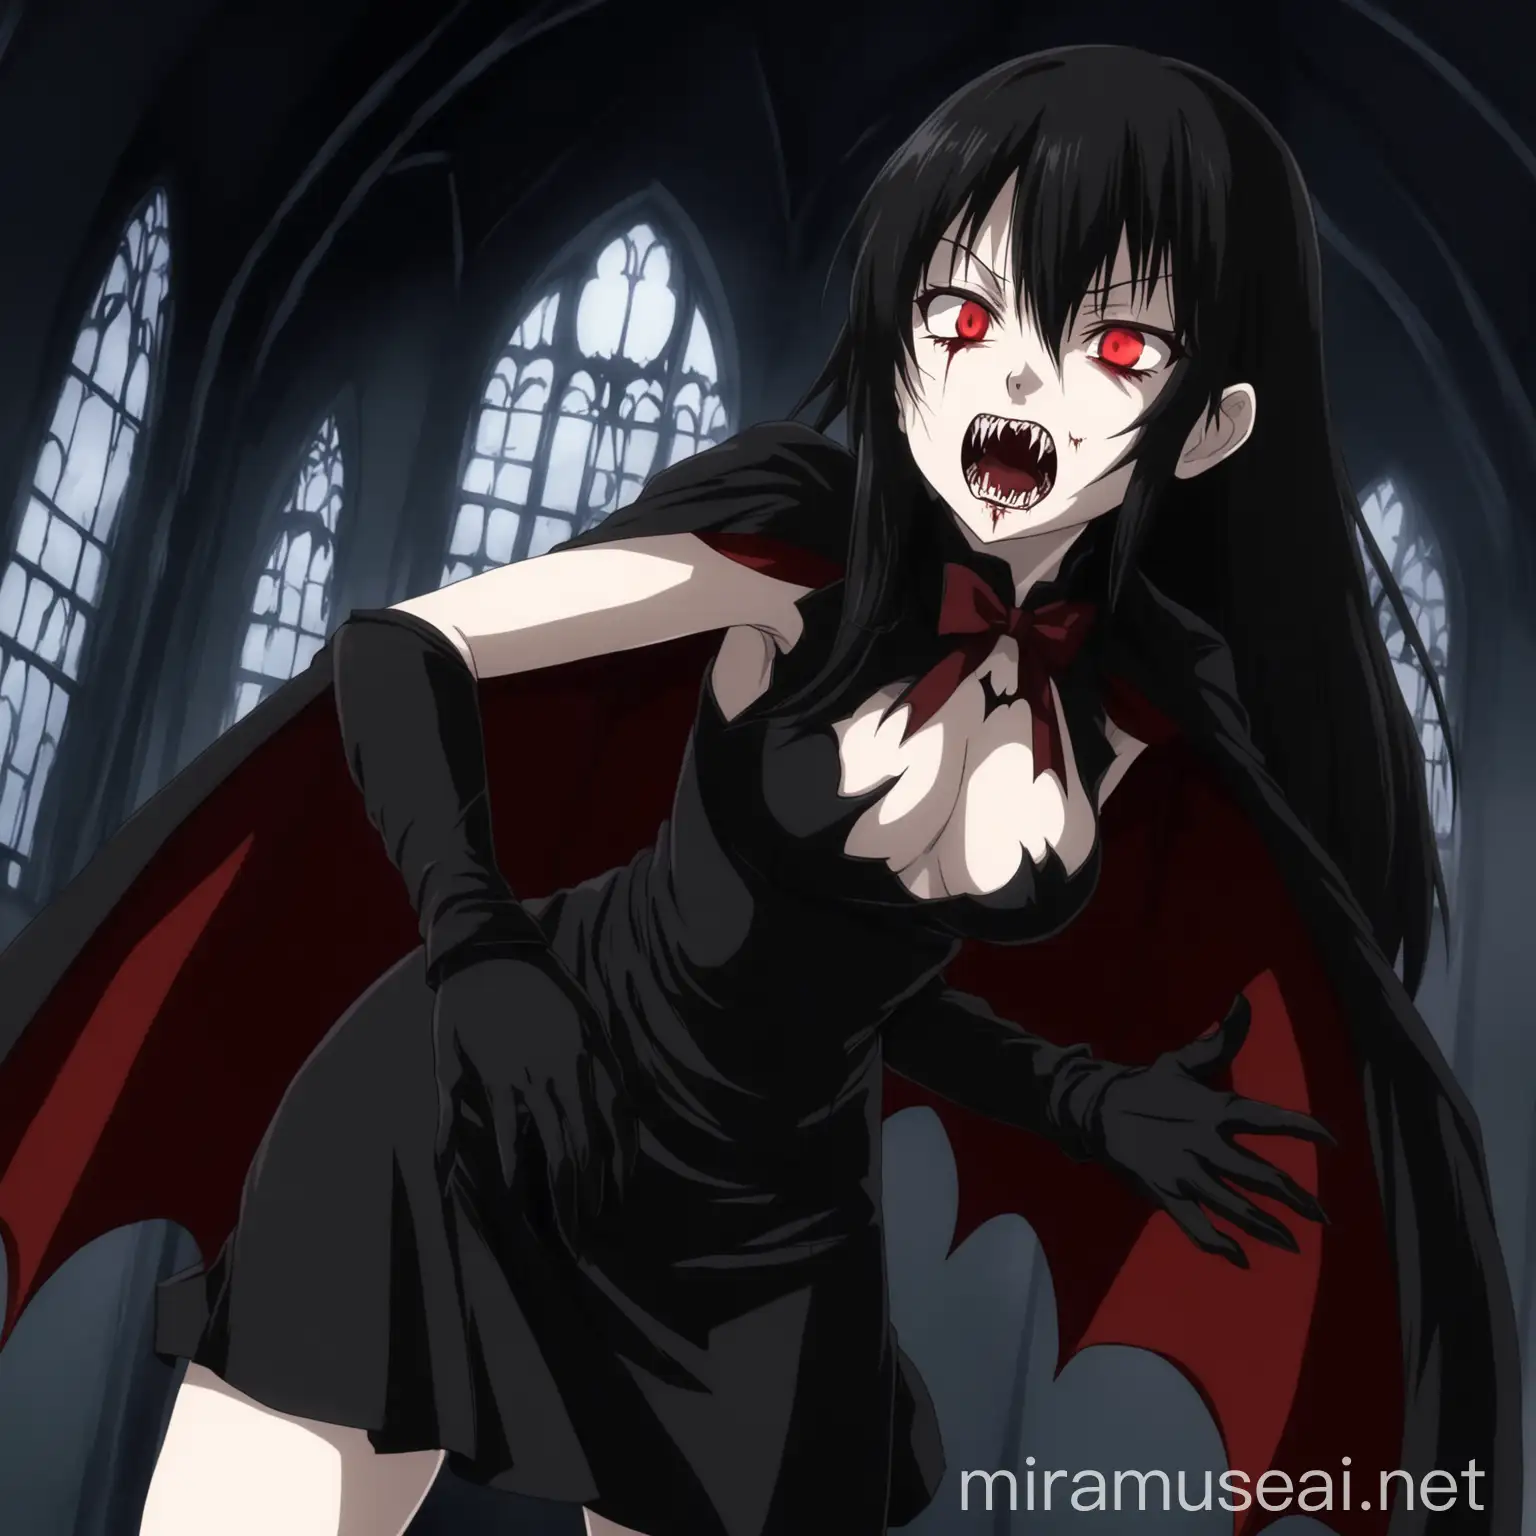 Anime Vampire Girl Transformation in Tight Black Dress